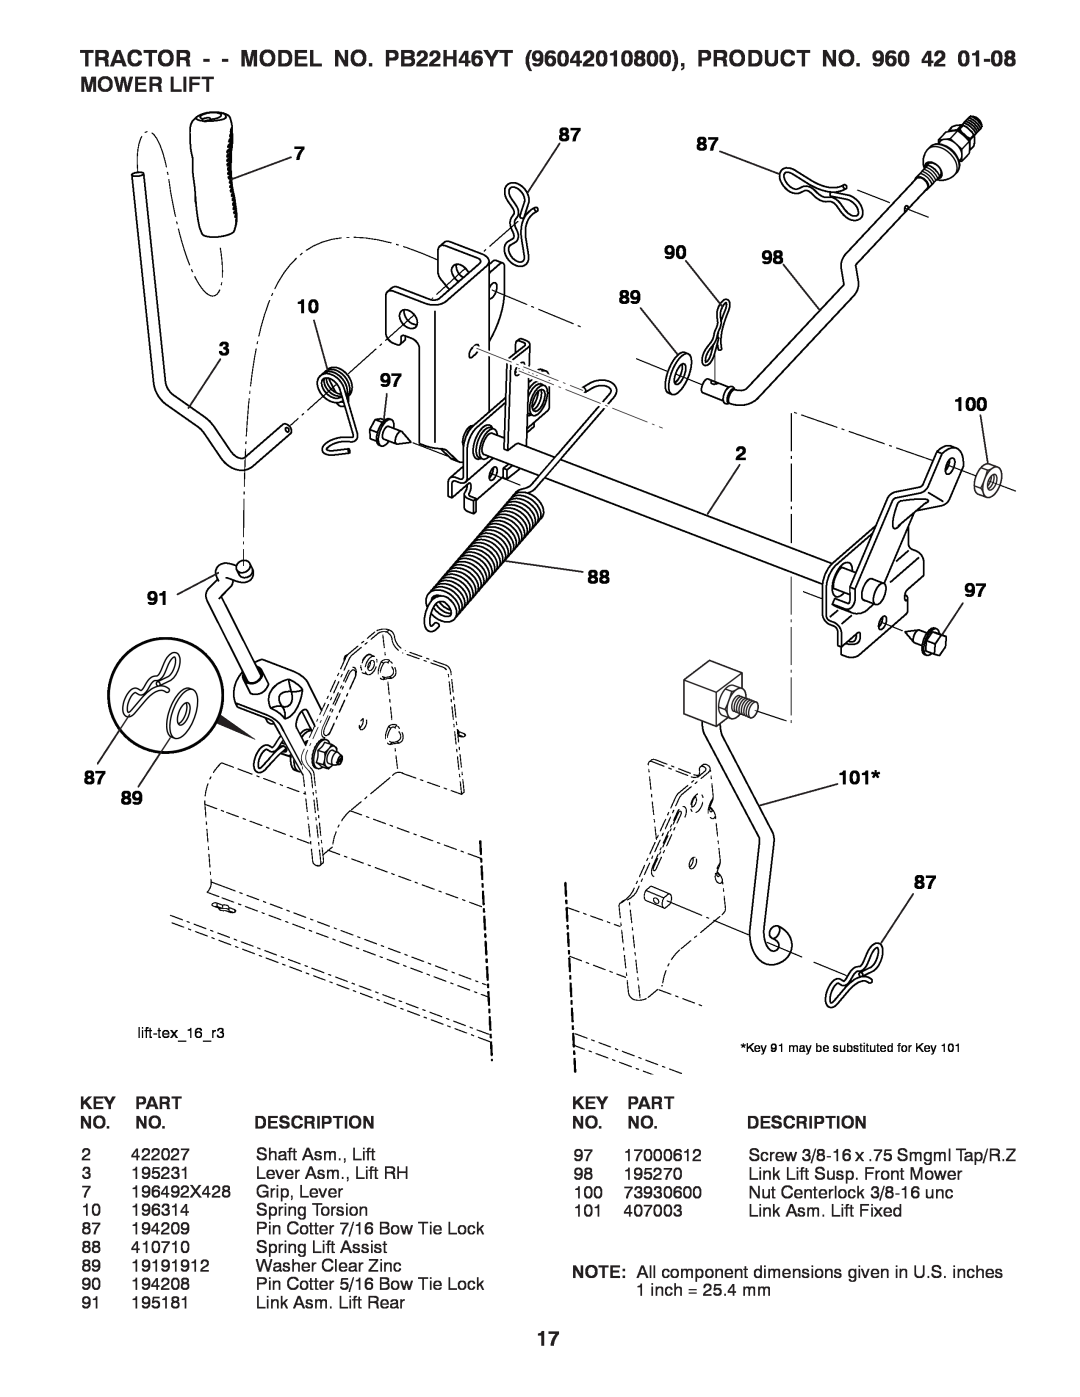 Poulan manual Mower Lift, TRACTOR - - MODEL NO. PB22H46YT 96042010800, PRODUCT NO. 960, 8787, lift-tex16r3 